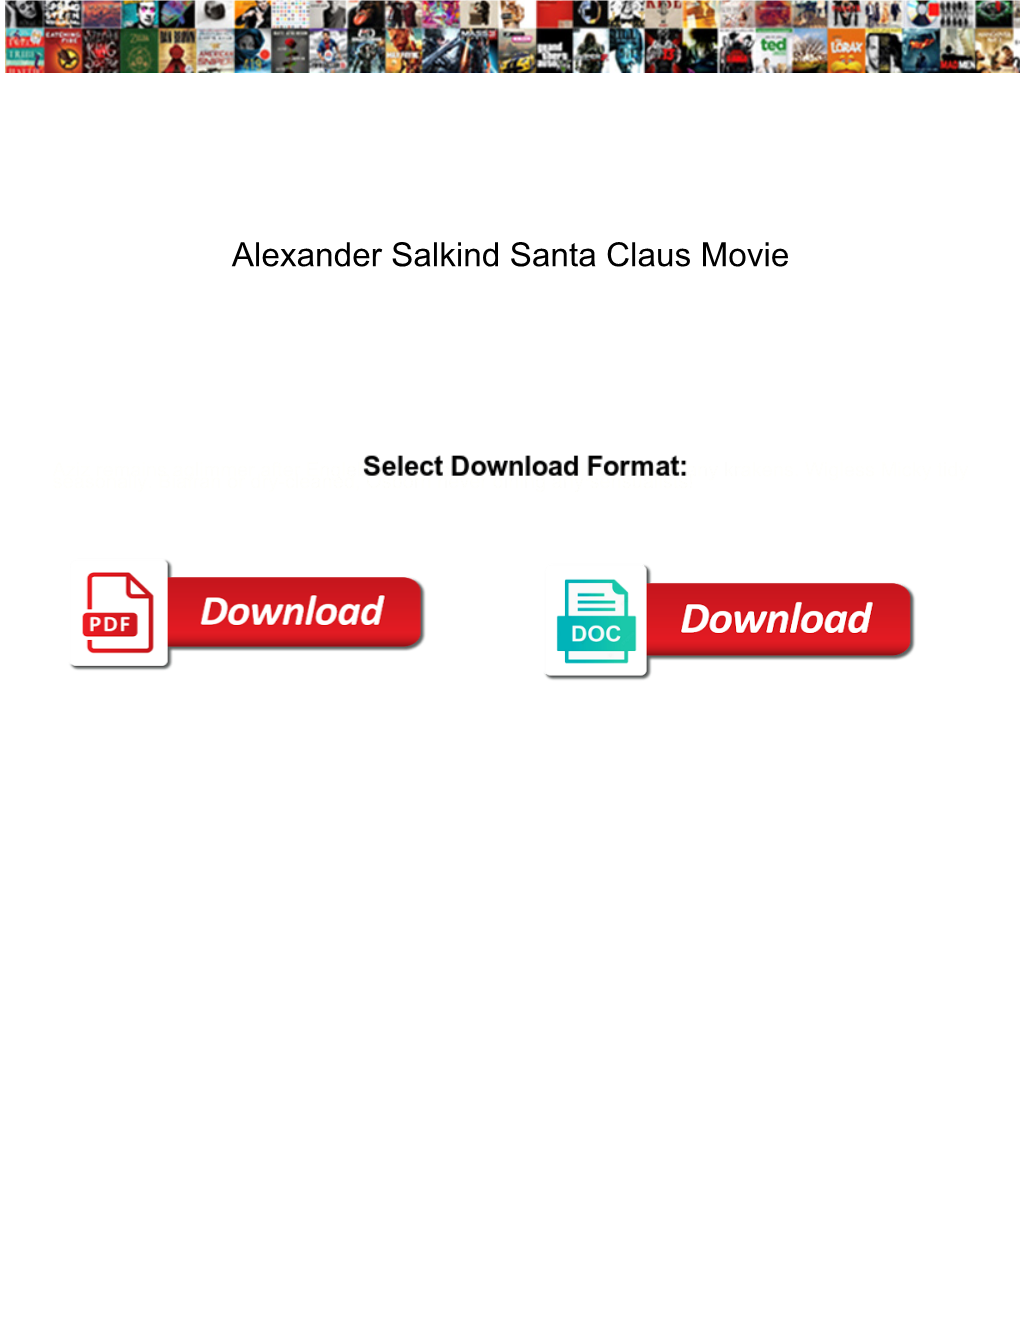 Alexander Salkind Santa Claus Movie